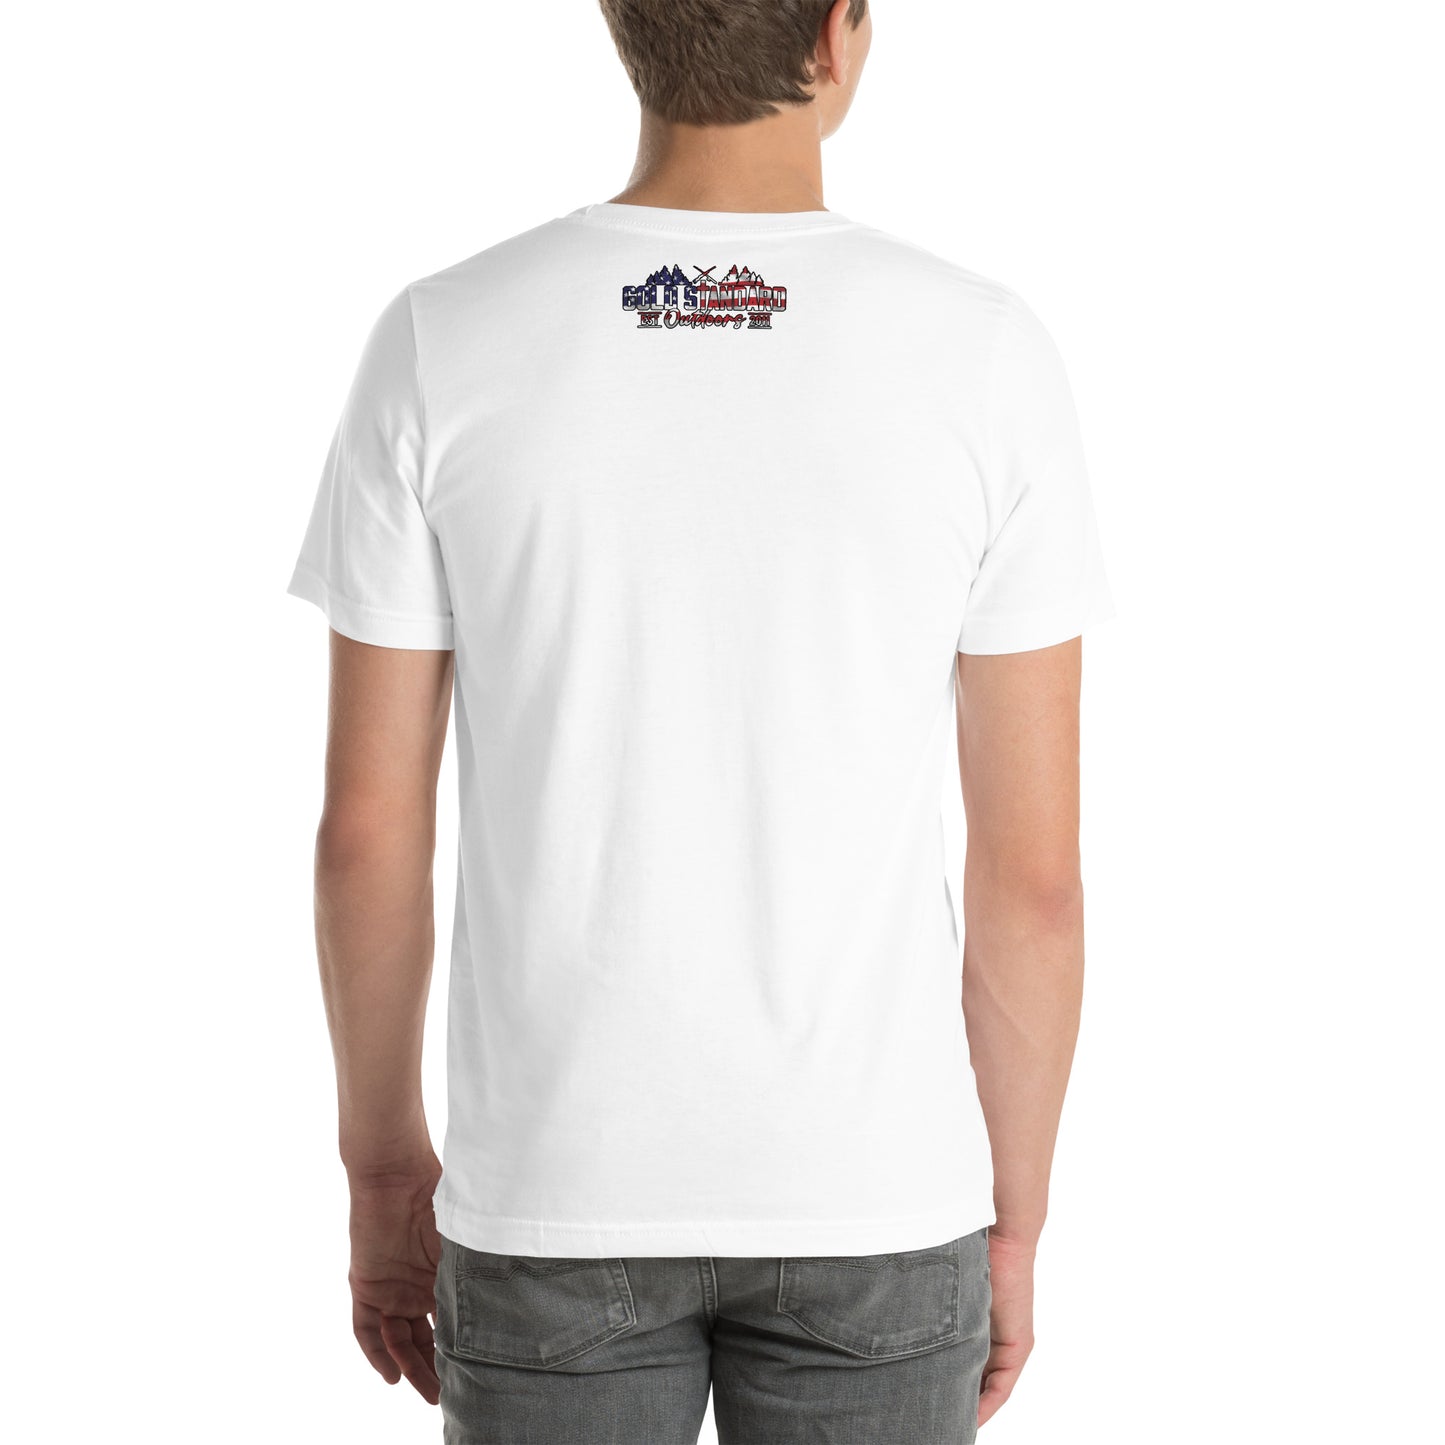 Merica Unisex T-Shirt